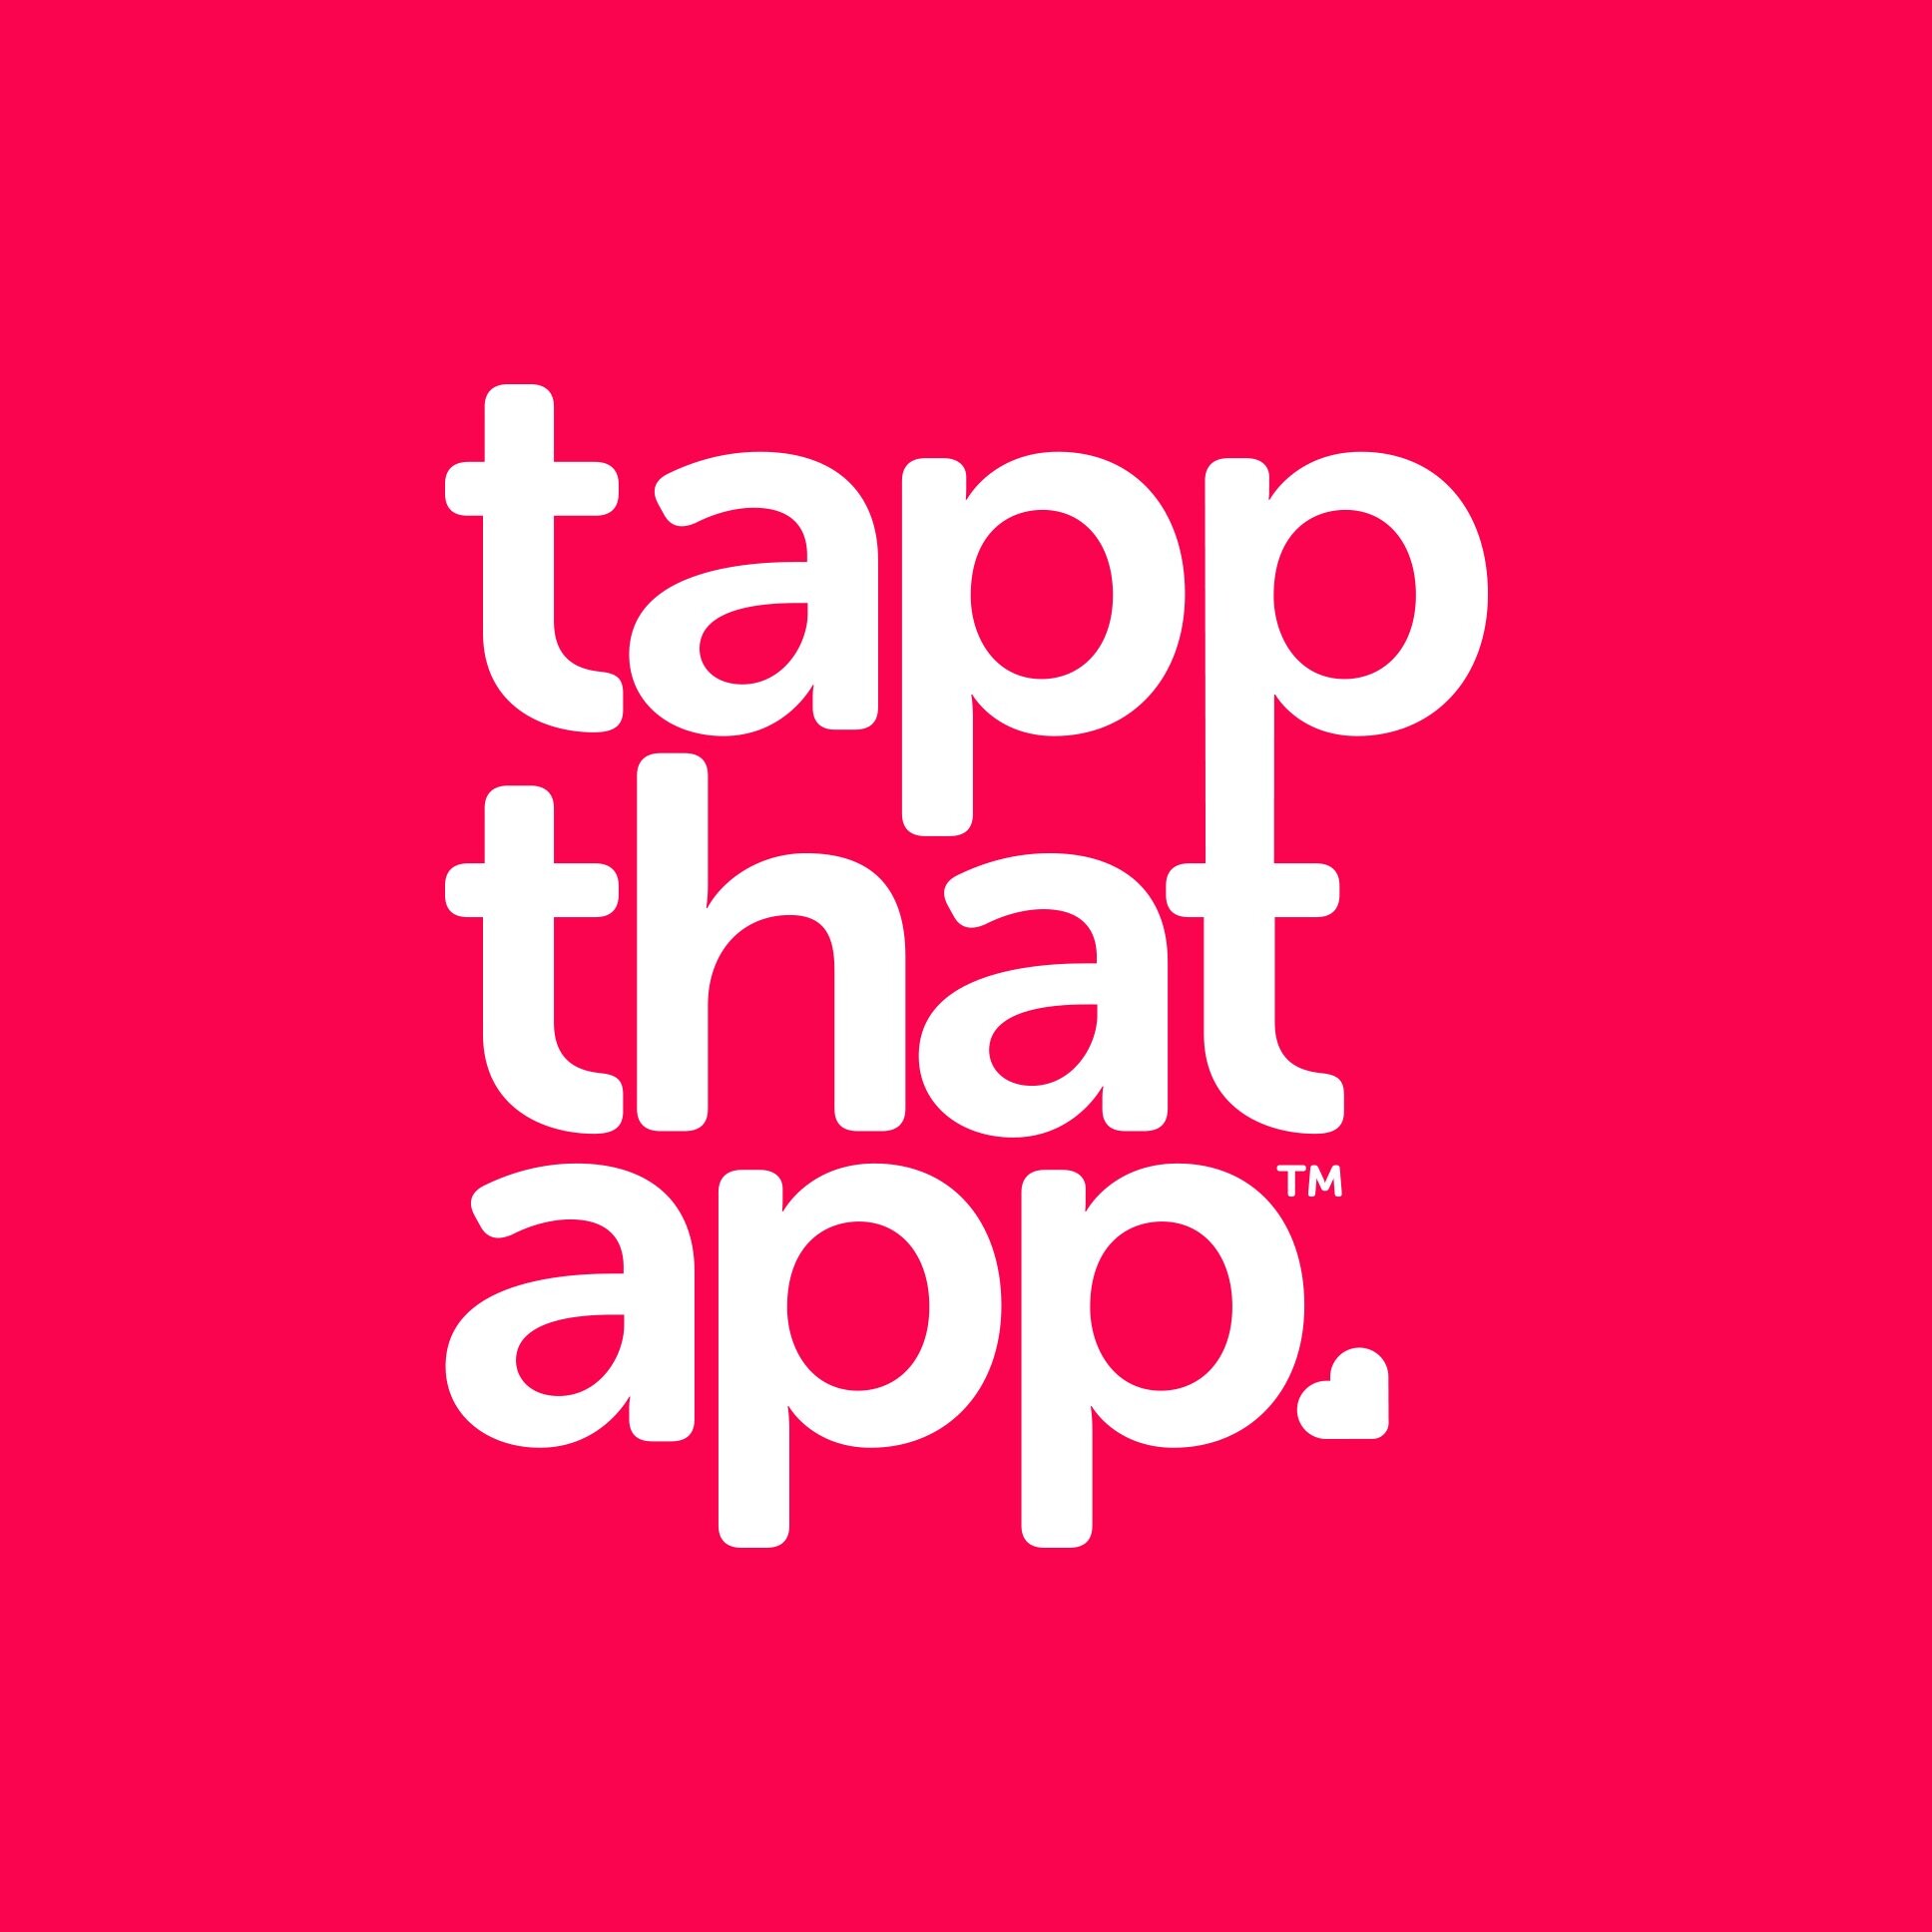 Tapp That App